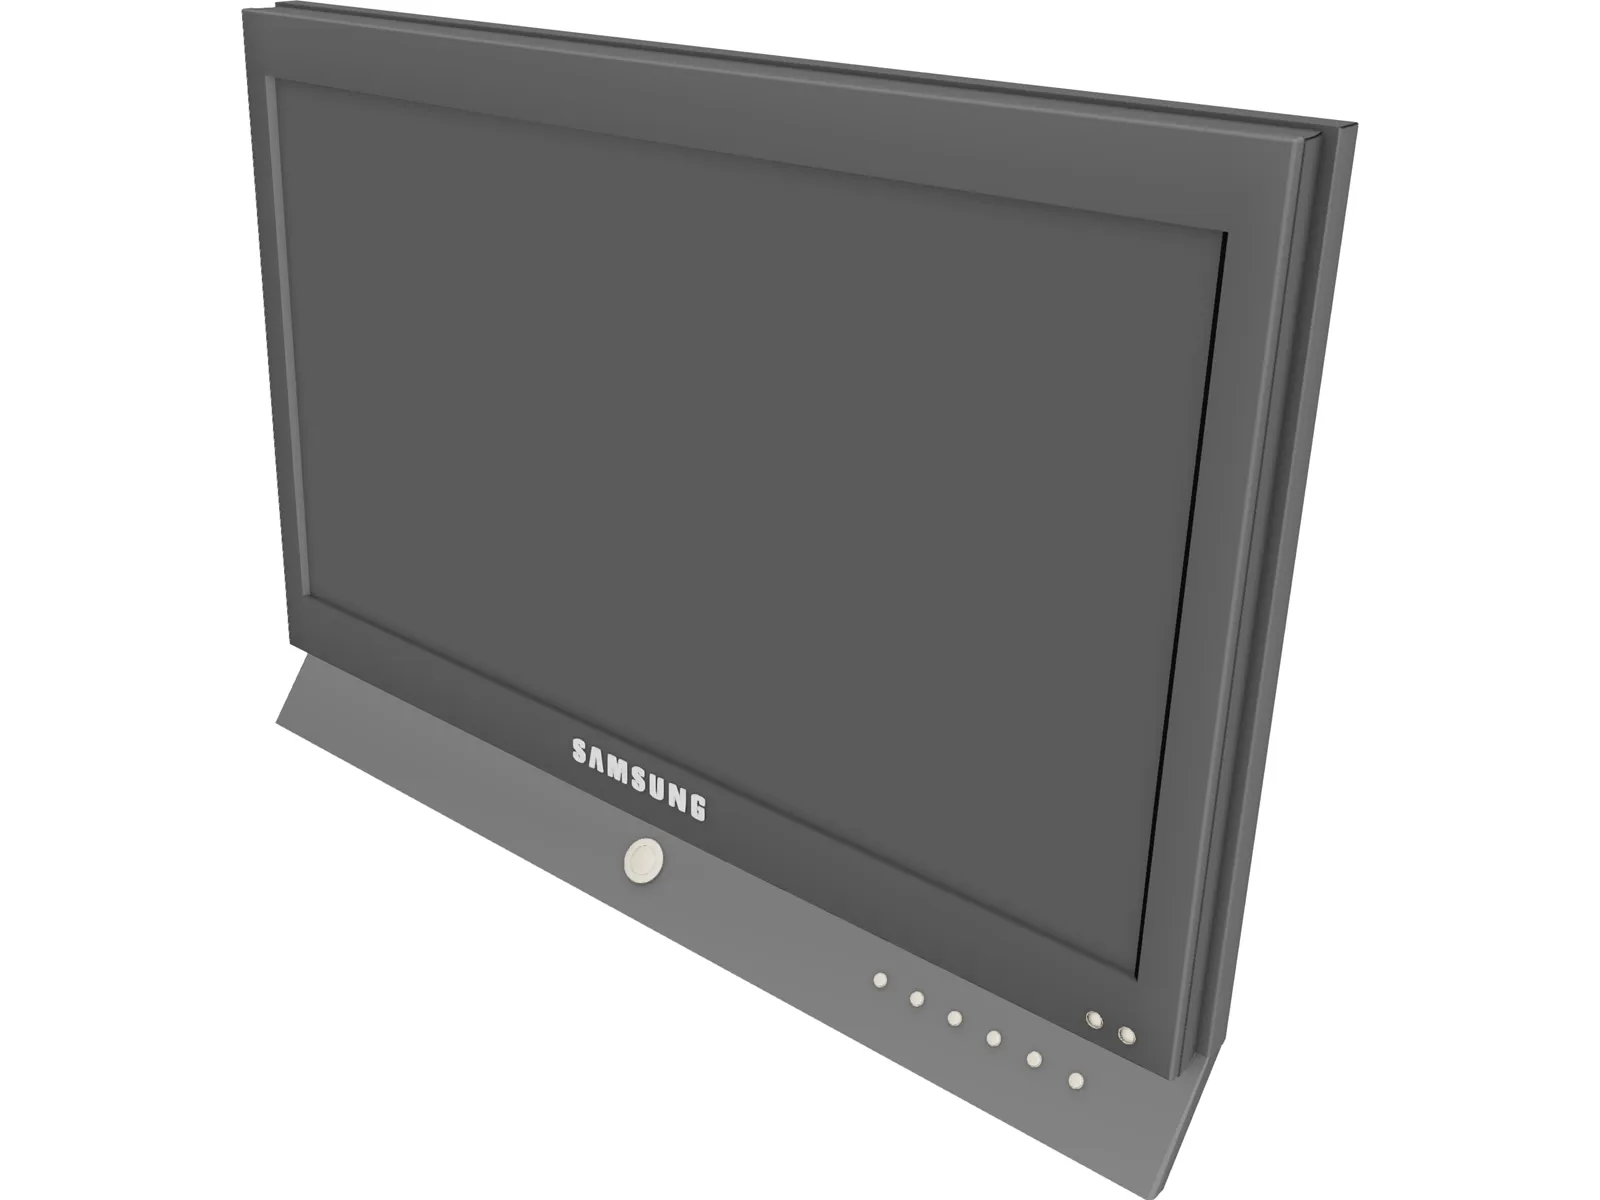 Samsung LCD TV 3D Model